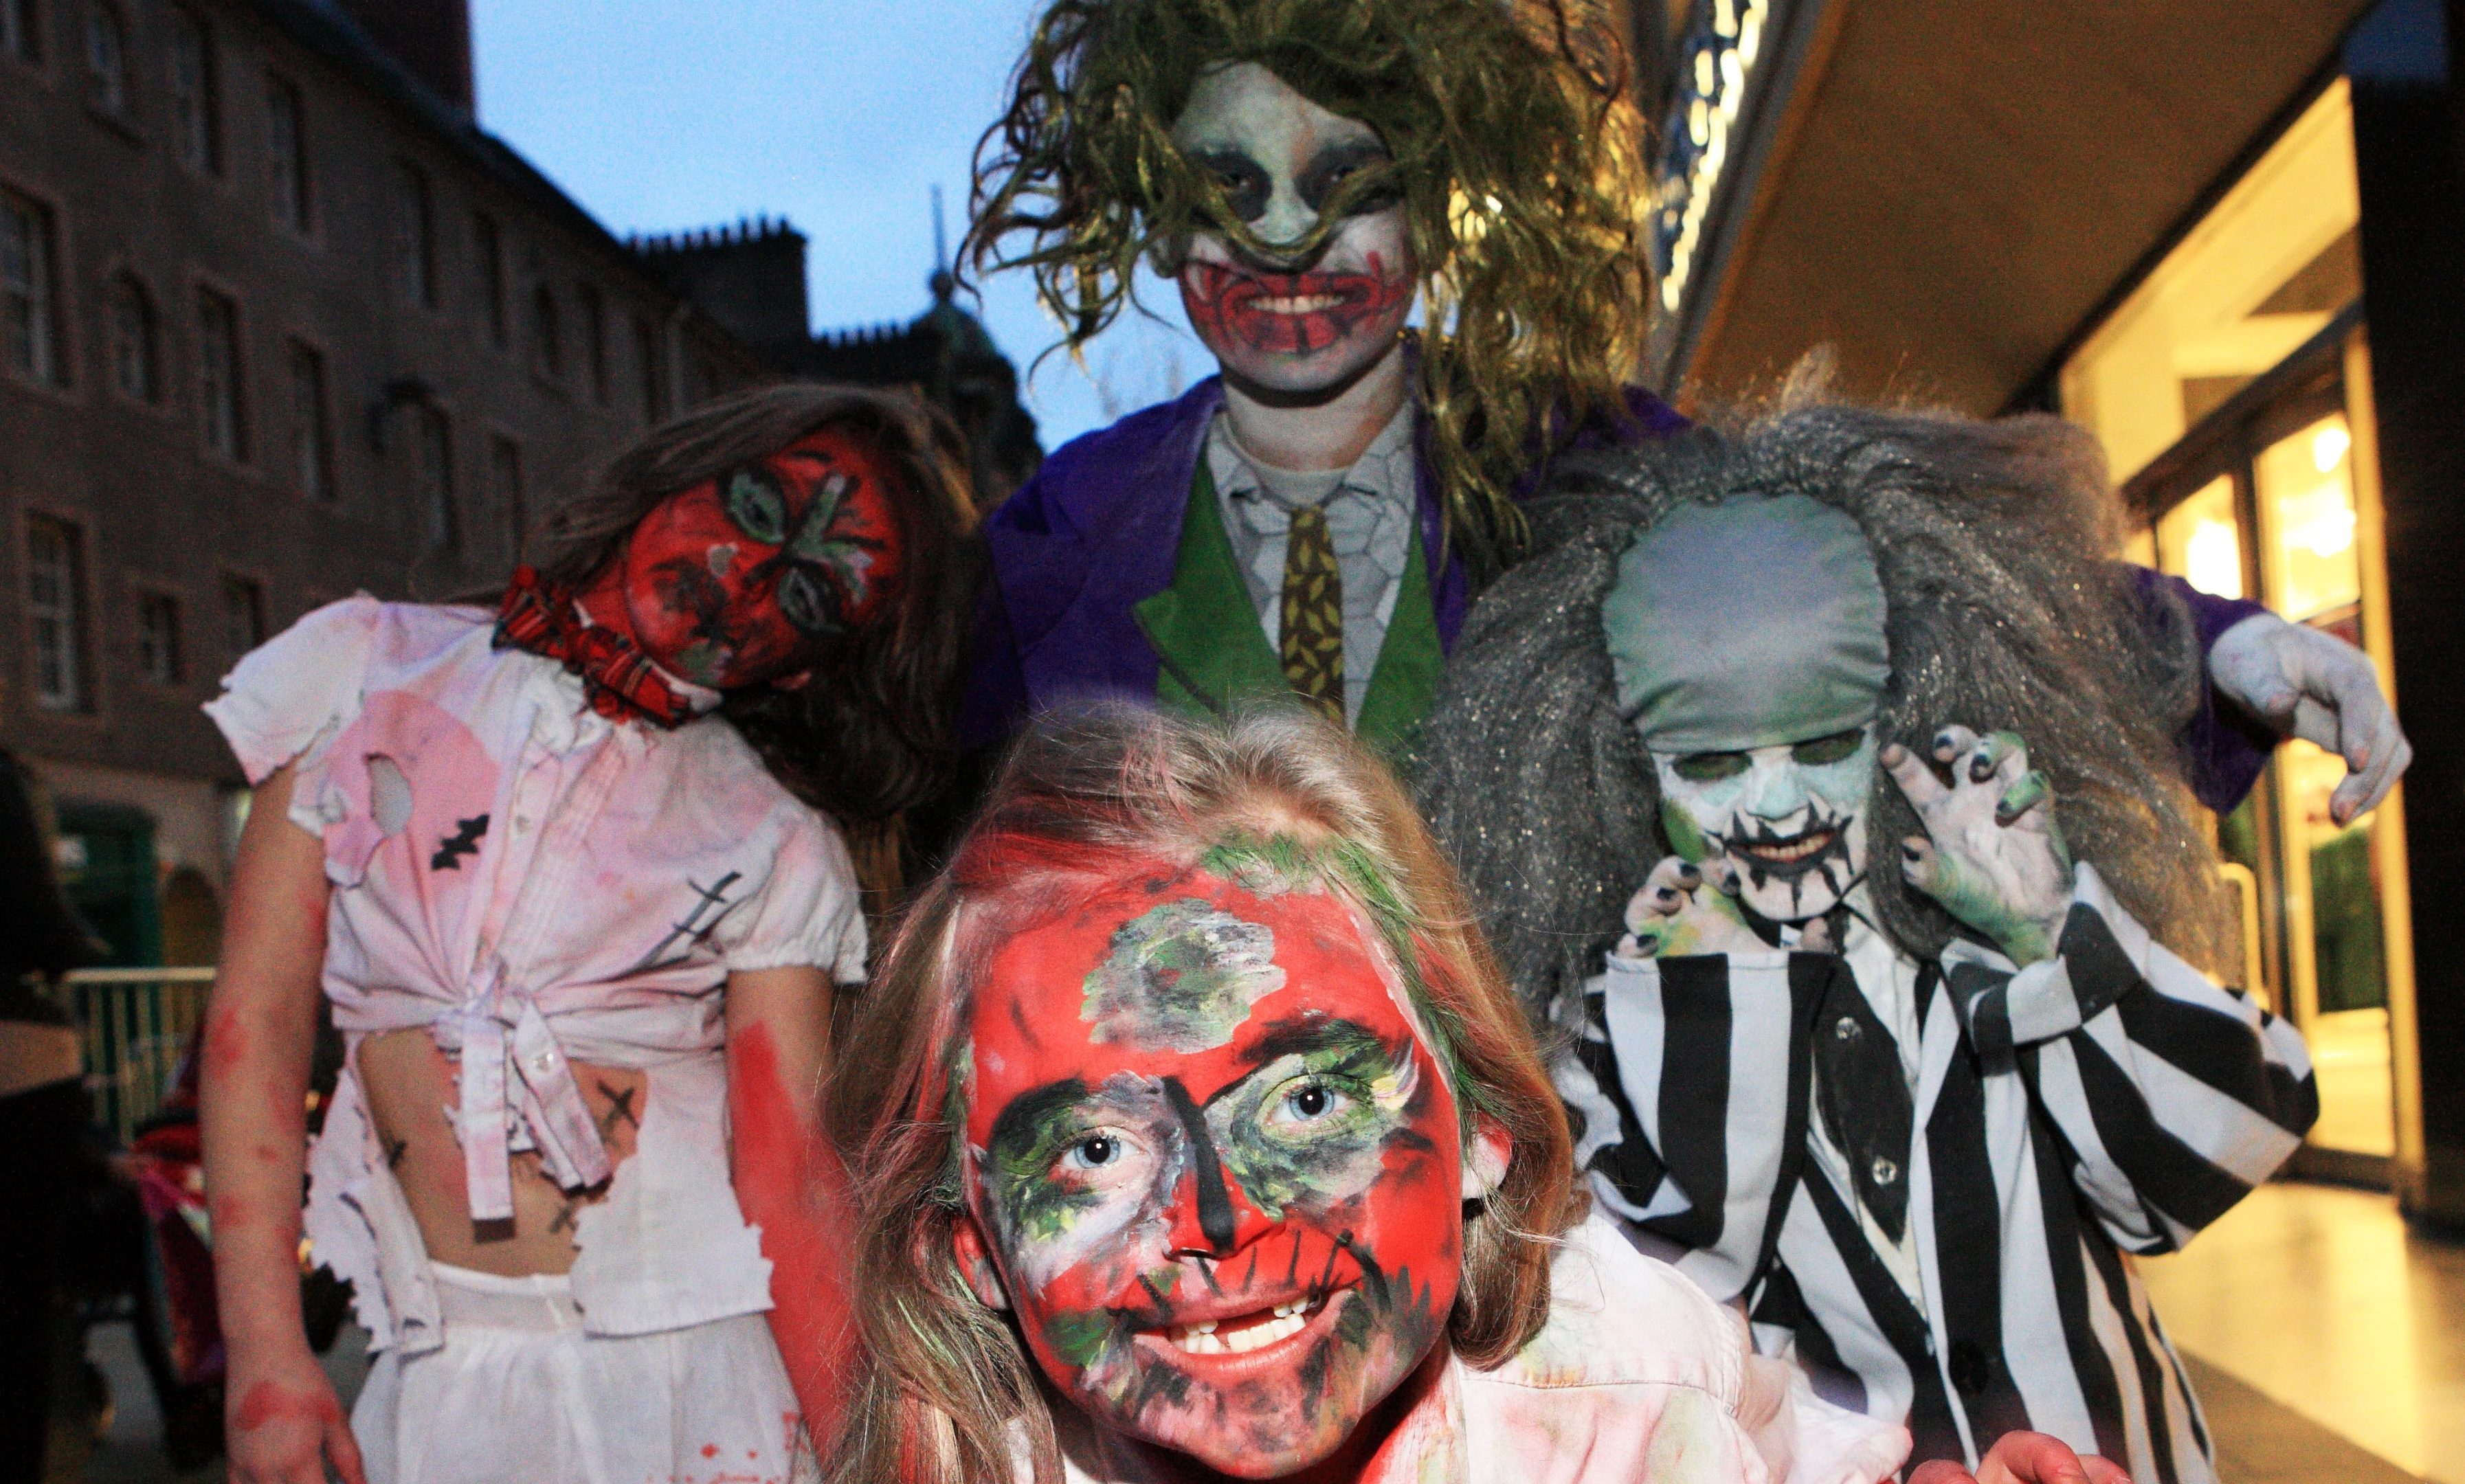 The halloween parade in Perth on saturday  'Zombie' Storm Macleod leads Atlanta Macleod (L) Kayleb Lochrie (B) Mark Macleod